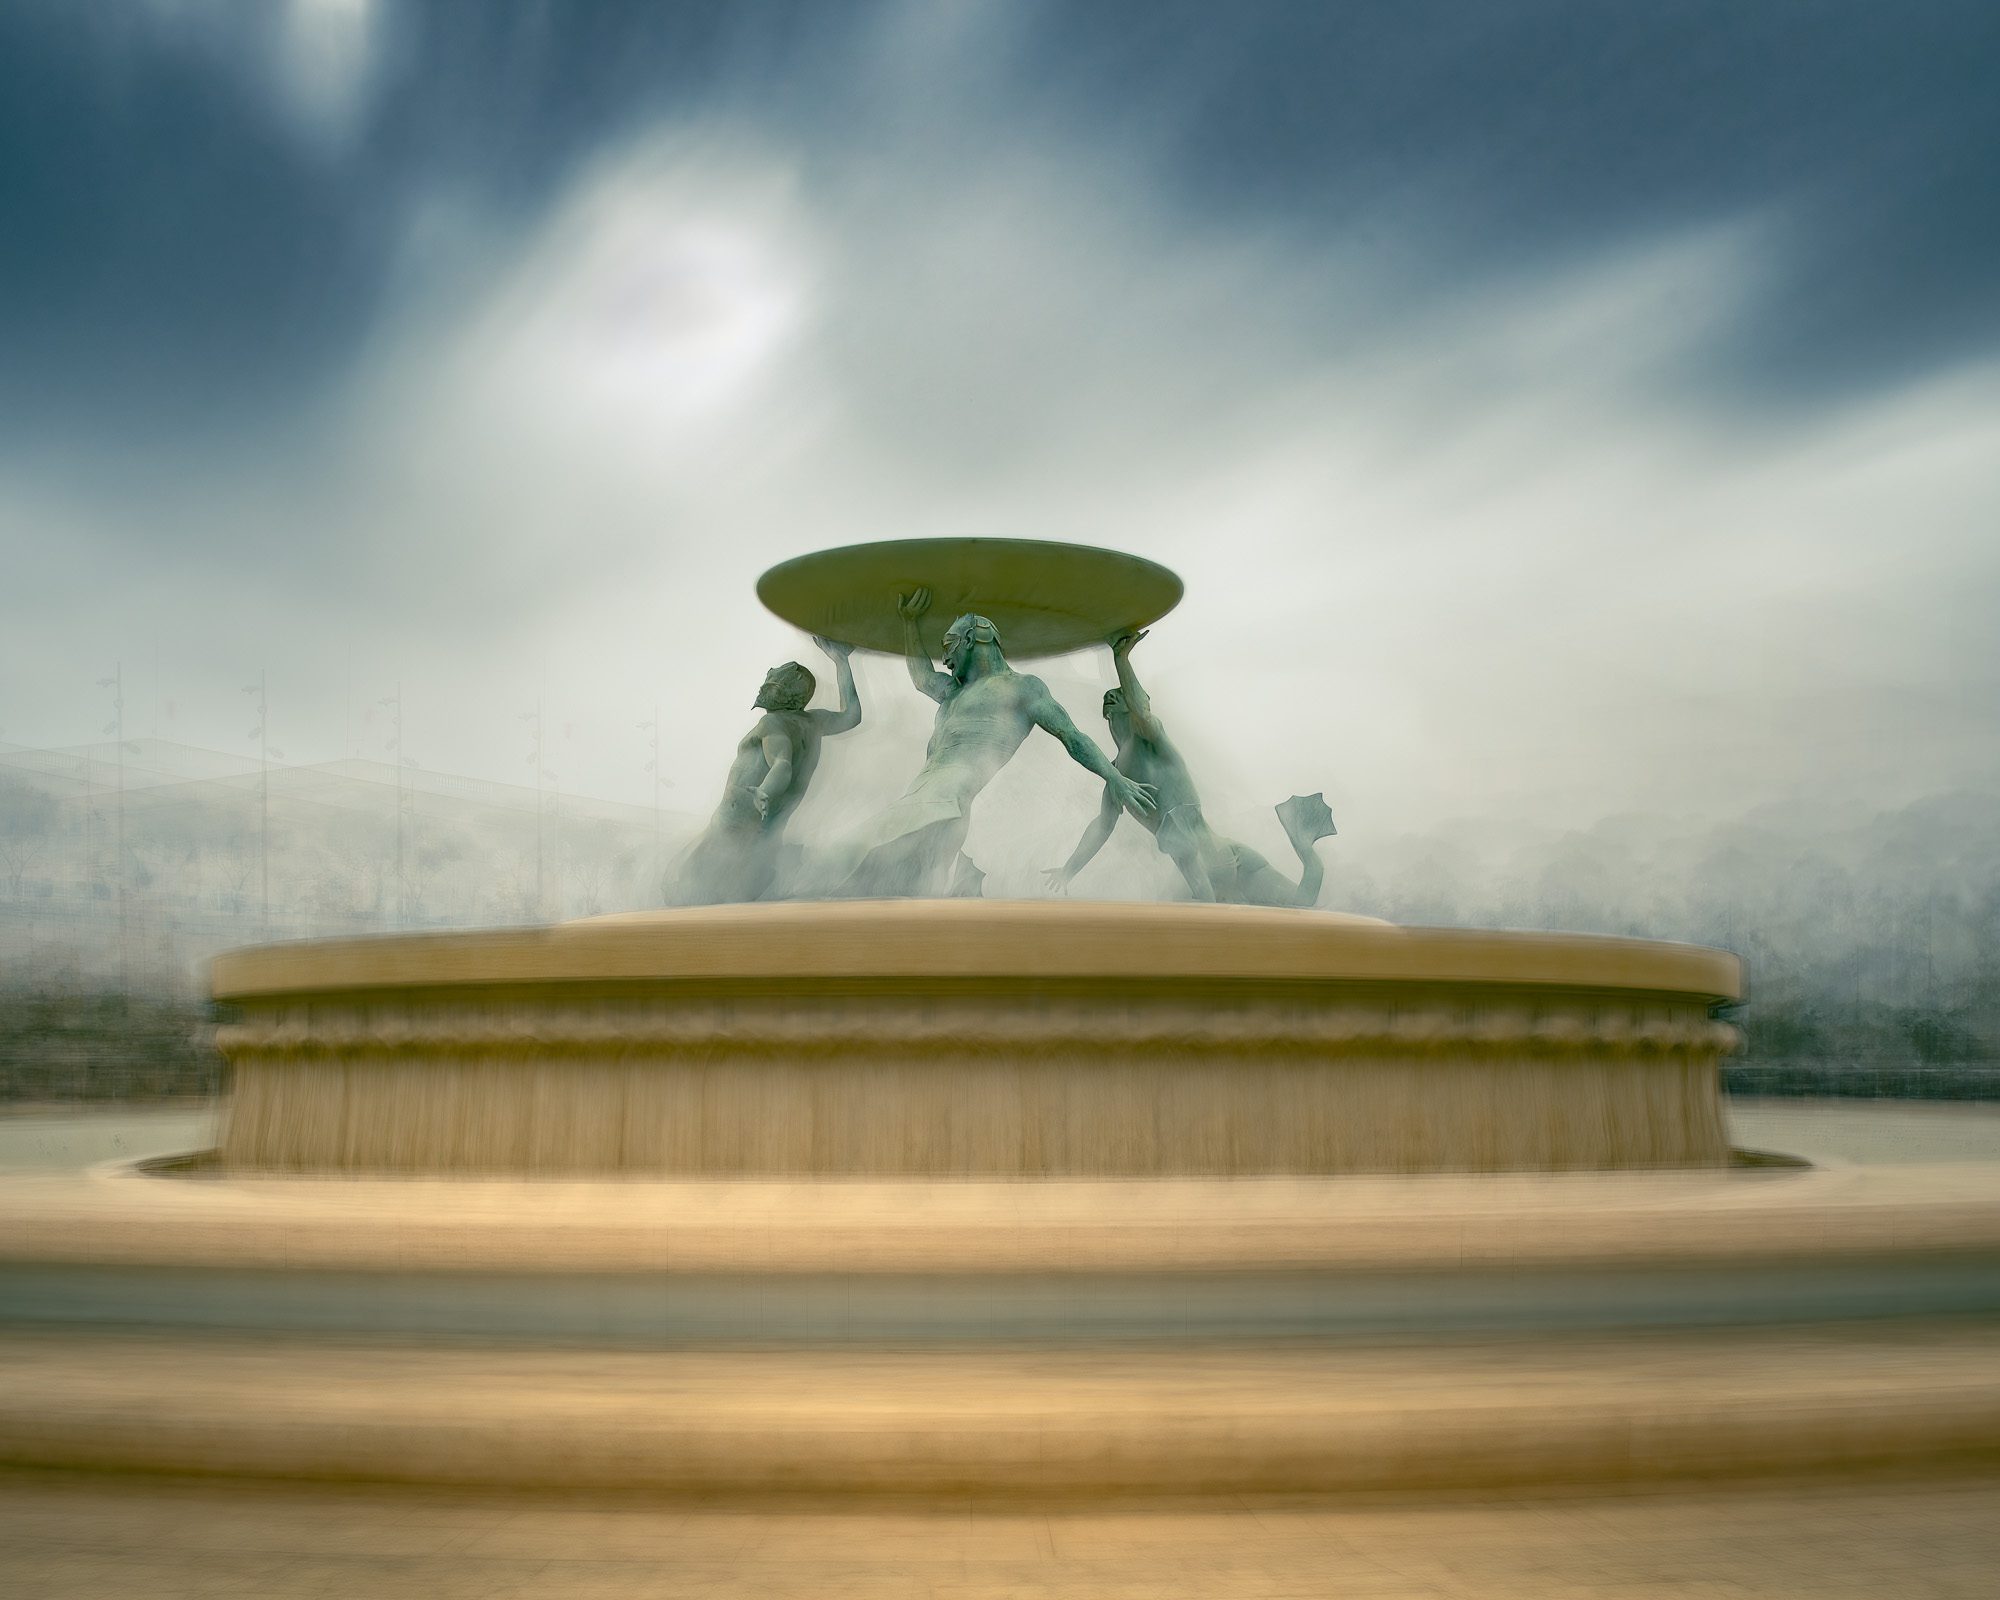 Triton’s Fountain has been an iconic landmark in Valletta since 1959